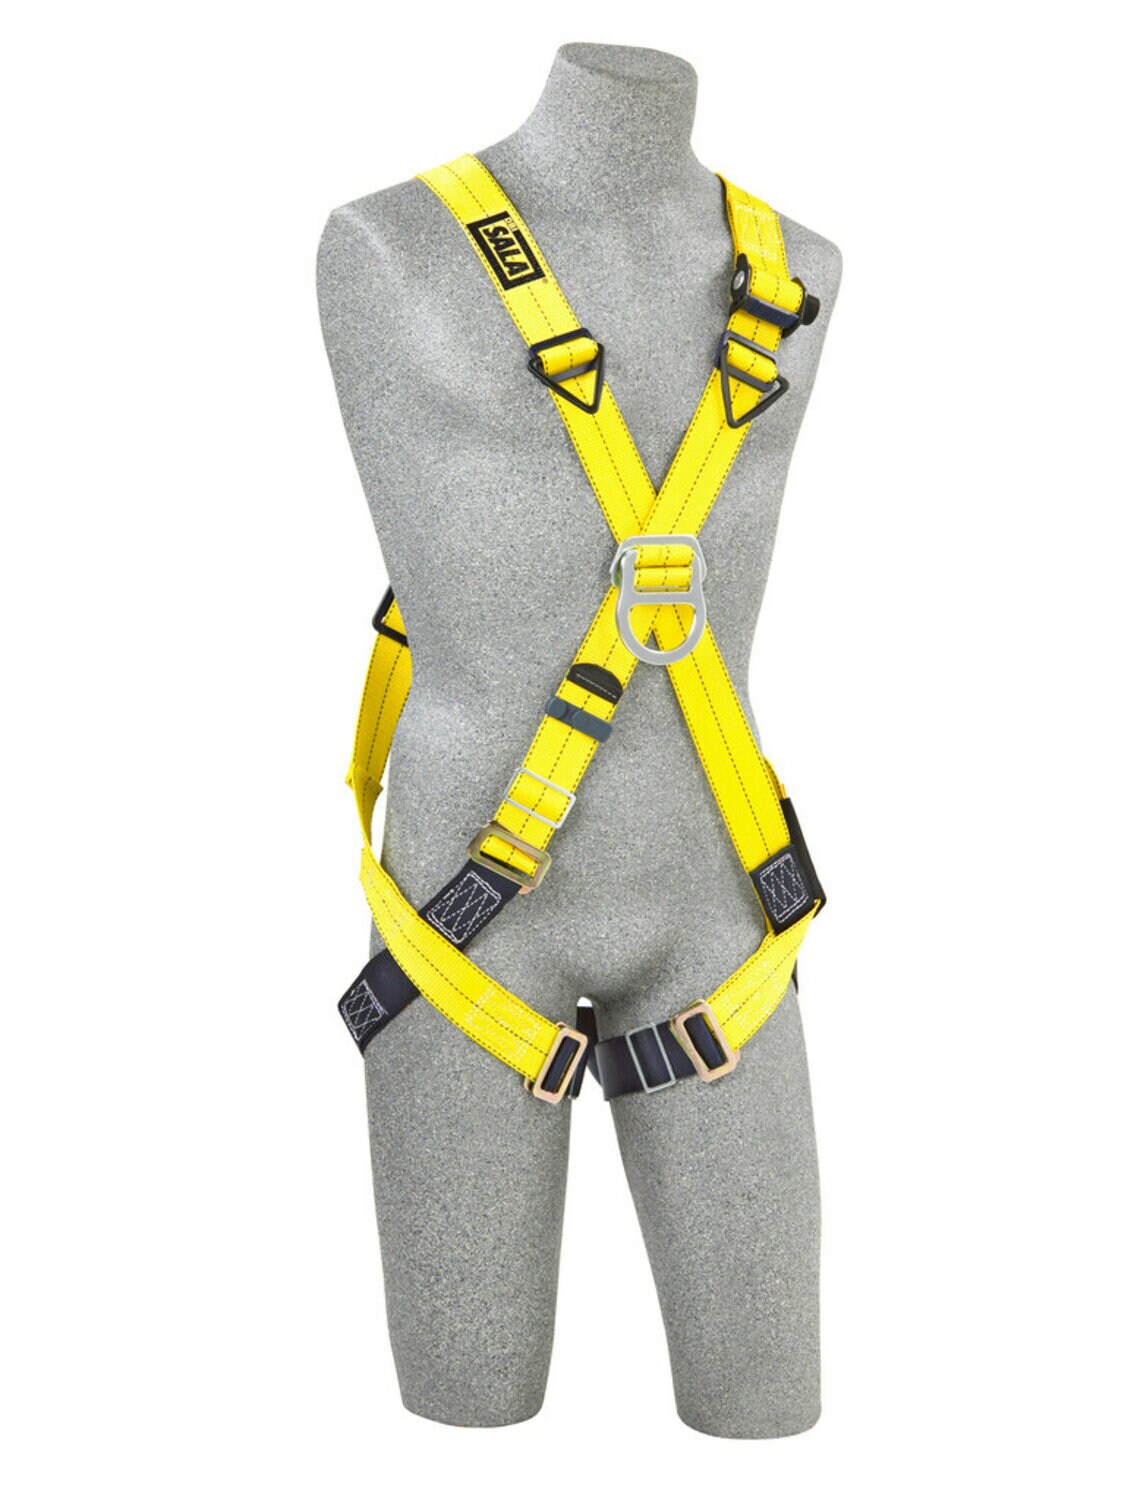 7012815326 - 3M DBI-SALA Delta Cross-Over Climbing Safety Harness 1102010, Universal